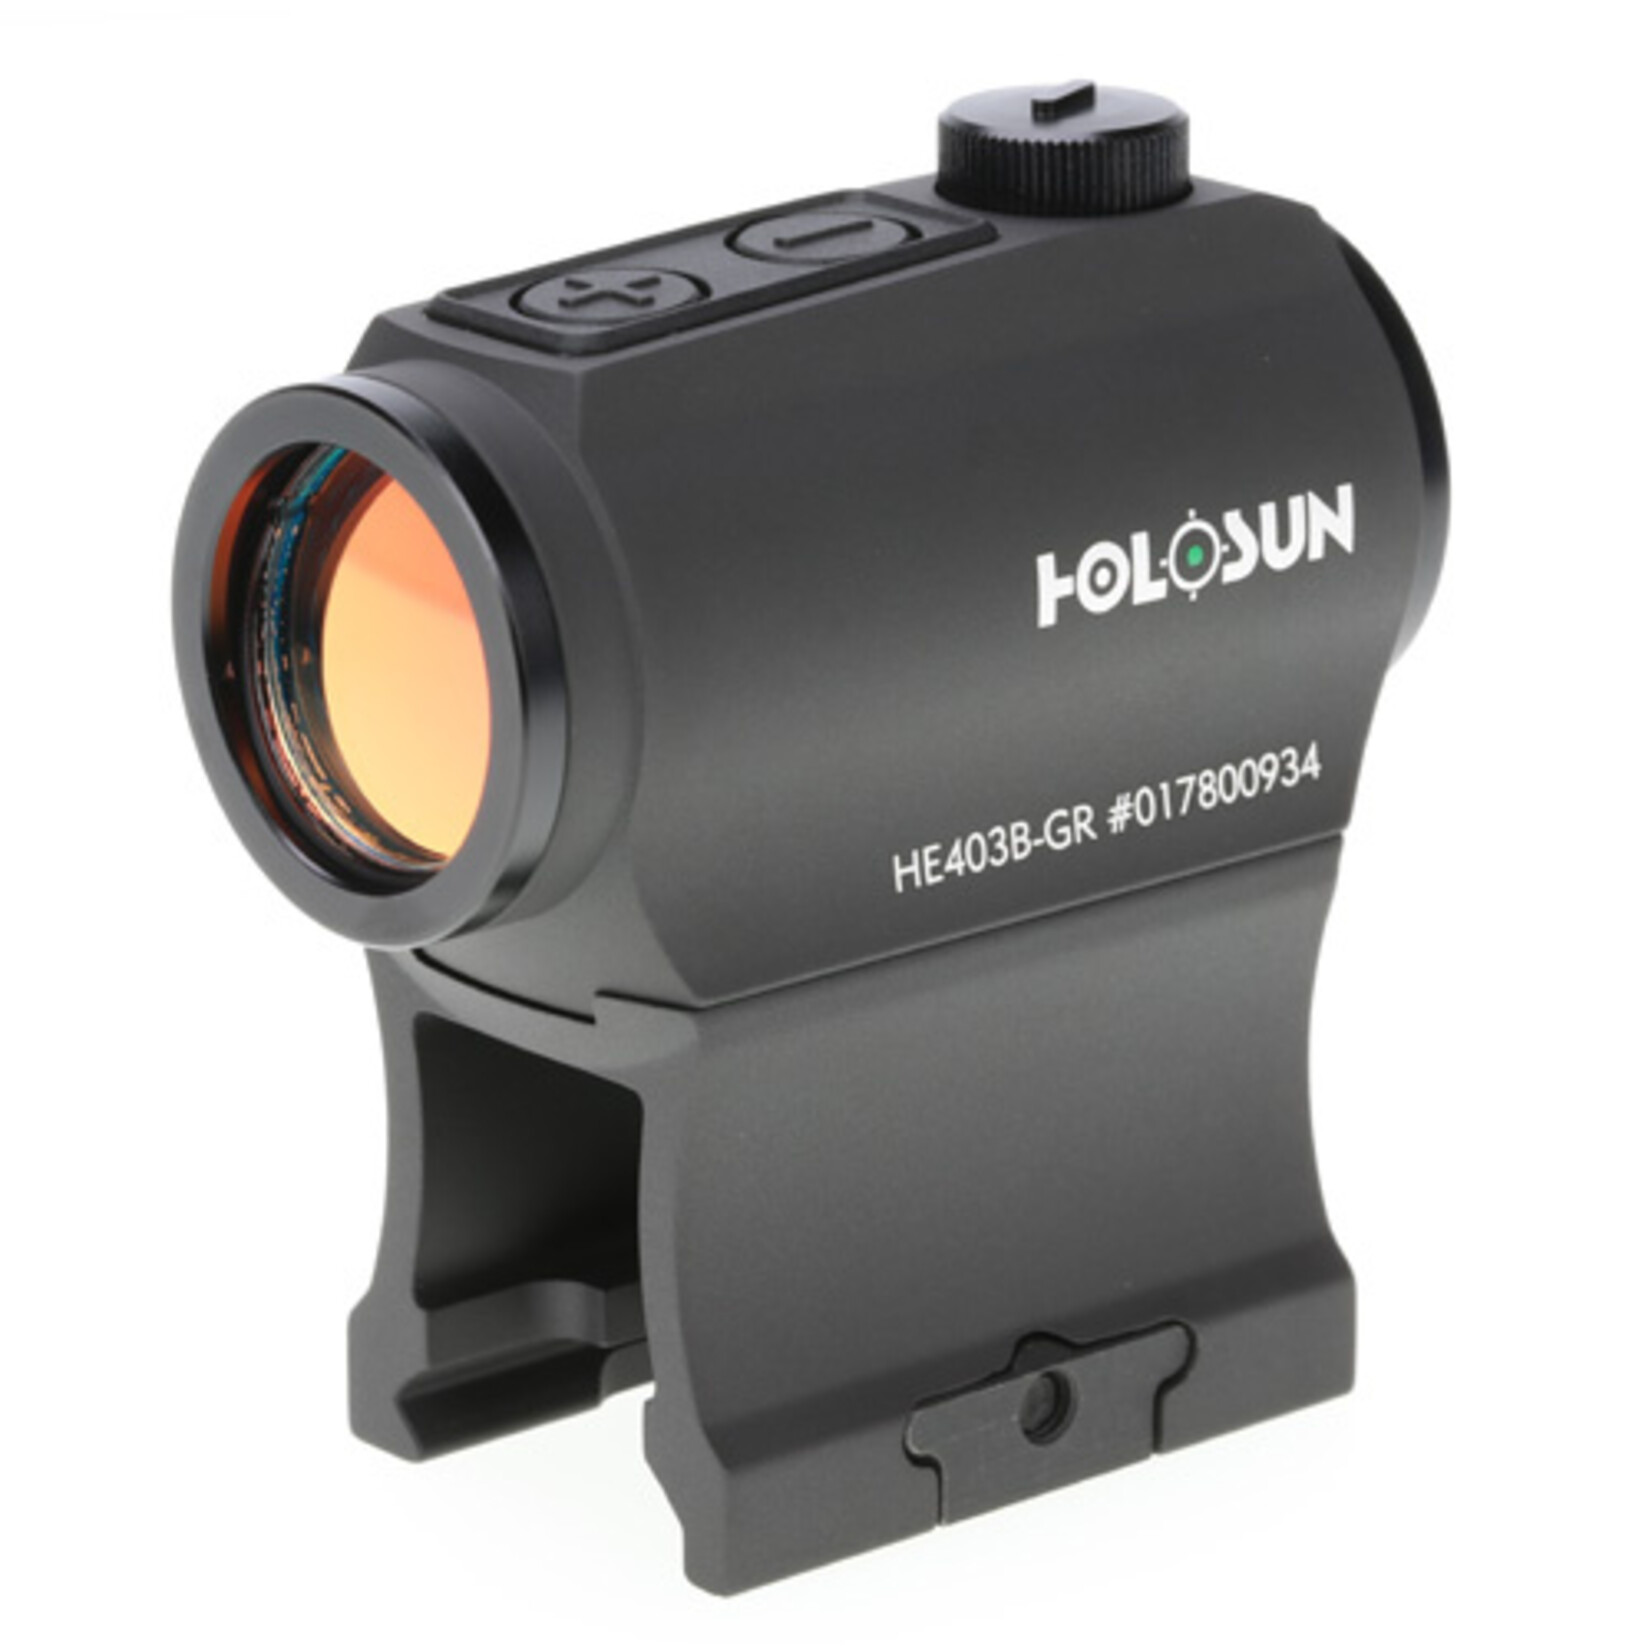 Holosun Technologies HE403B-GR Green Dot 2MOA